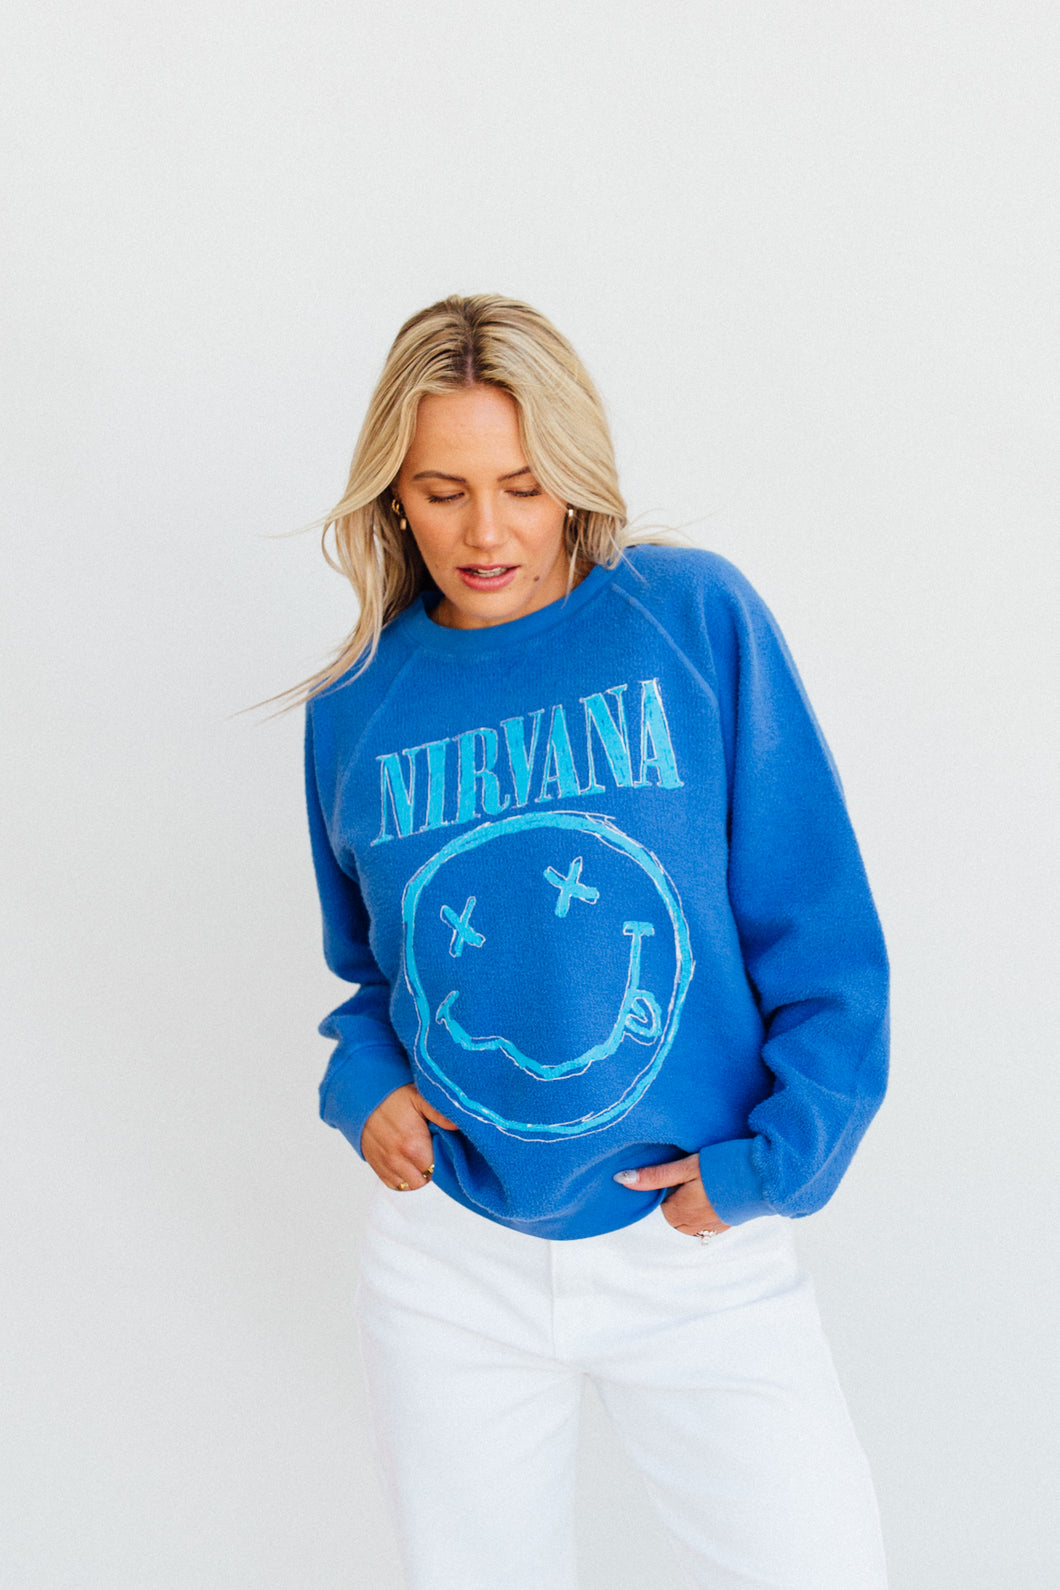 Daydreamer Nirvana Smiley Crew (Cobalt)